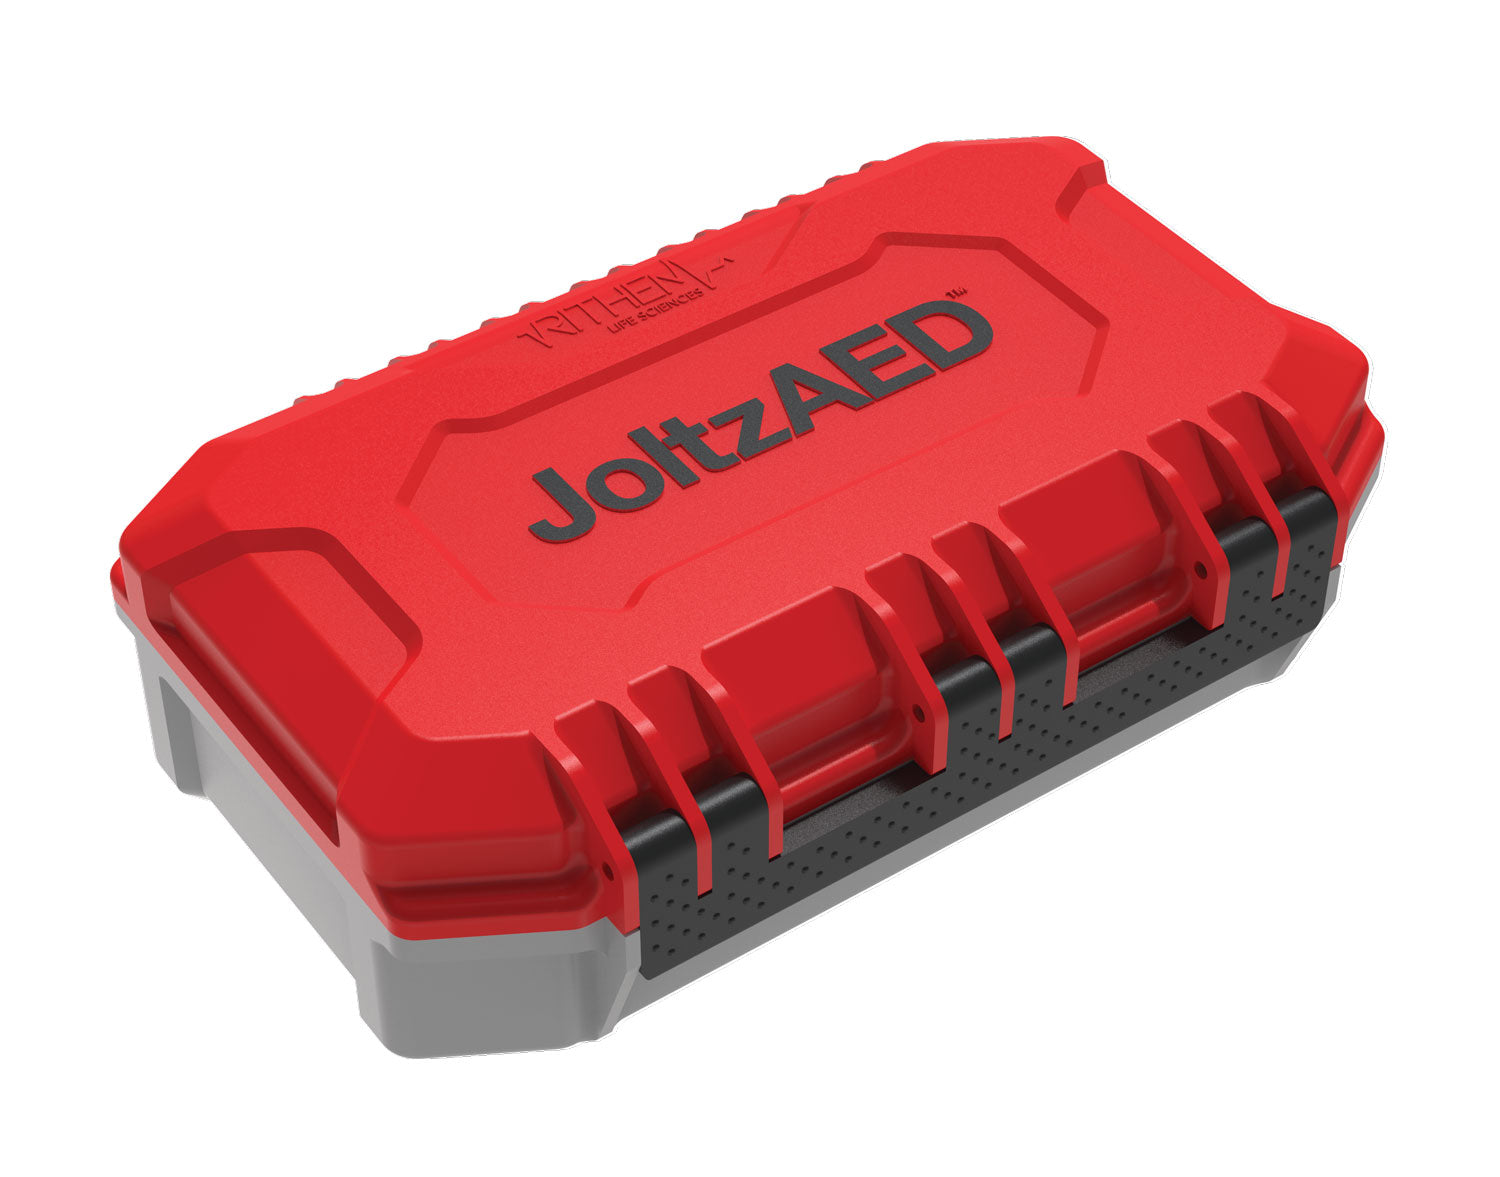 JoltzAED - The AED Reimagined